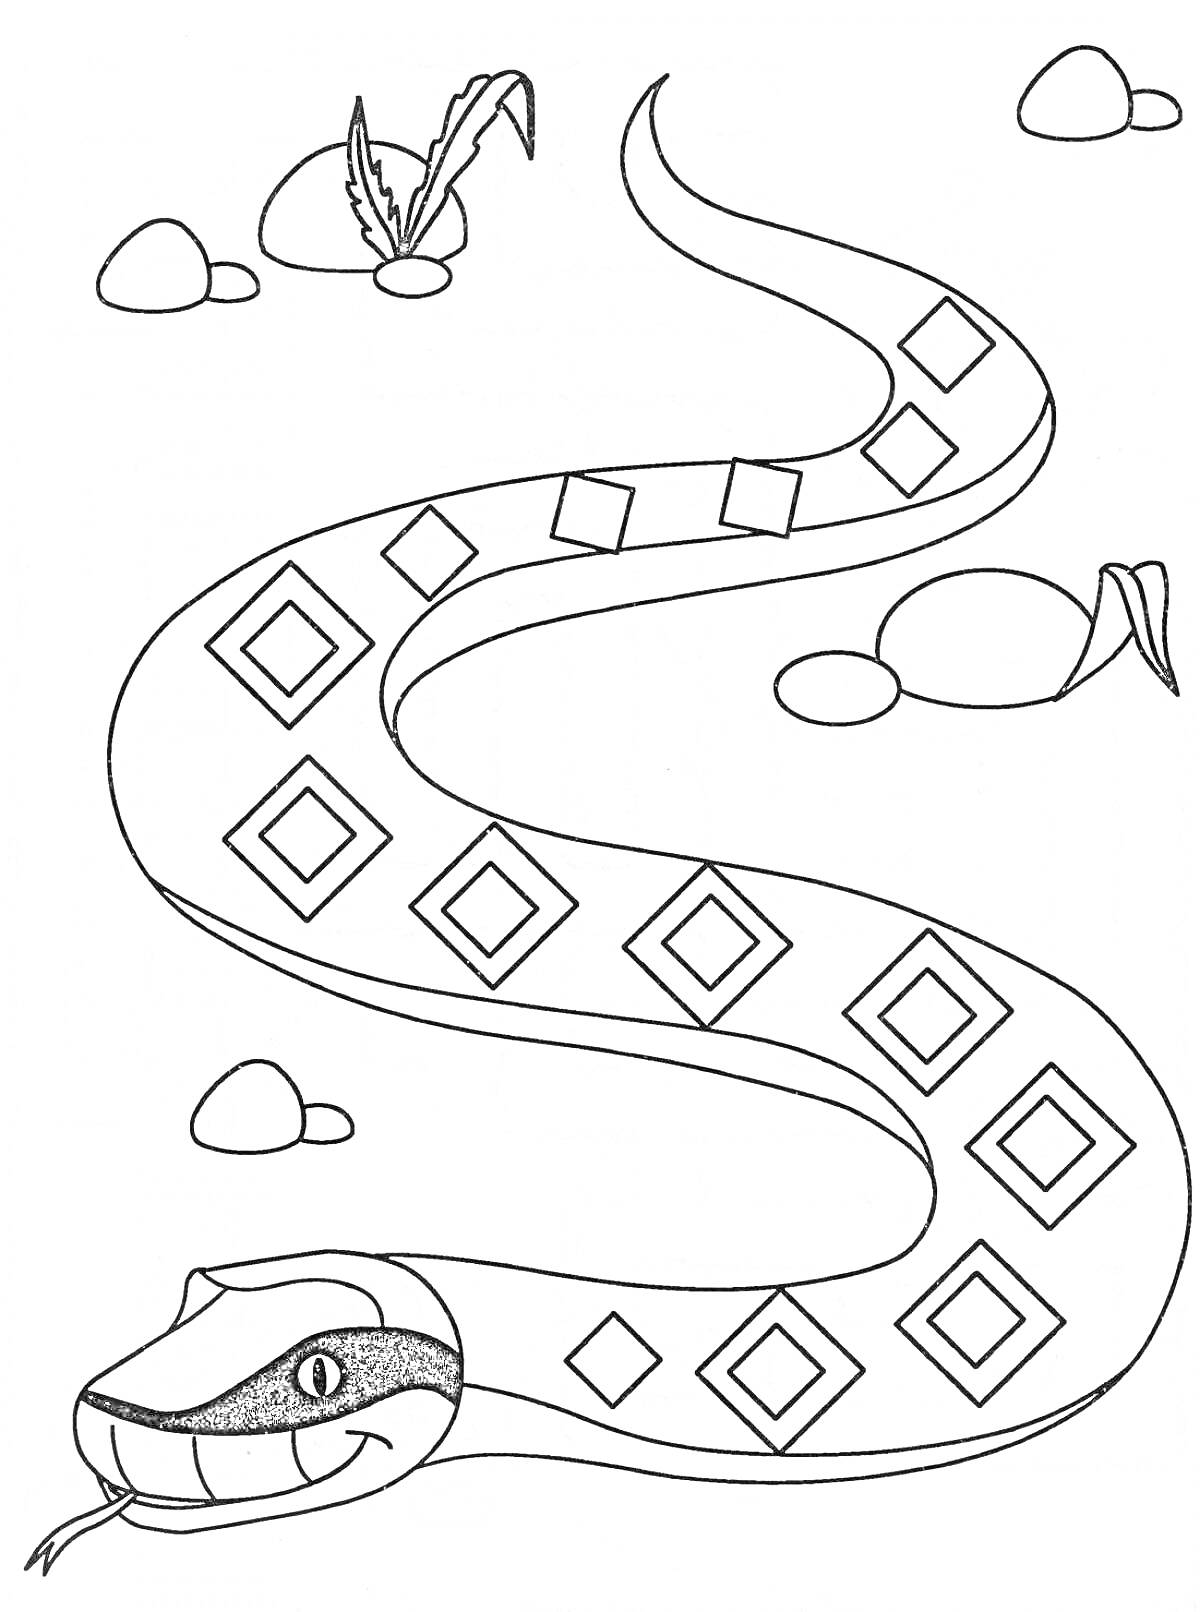 Раскраска Змея с узором алмазов на спине, травинка и камни на фоне